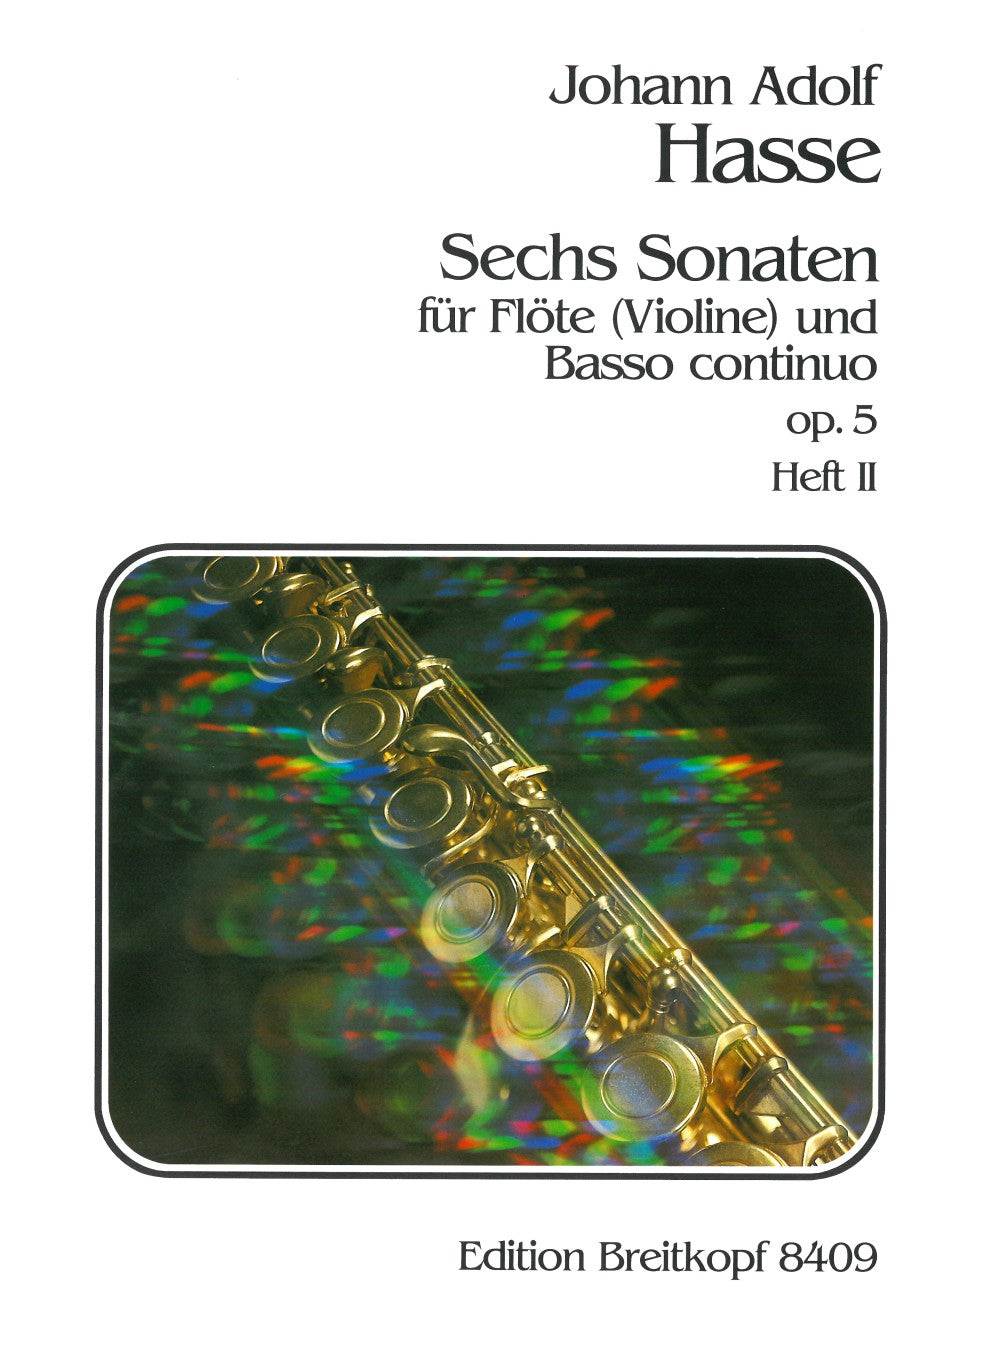 Hasse: 6 Flute Sonatas Op. 5 - Volume 2 (Nos. 4-6)